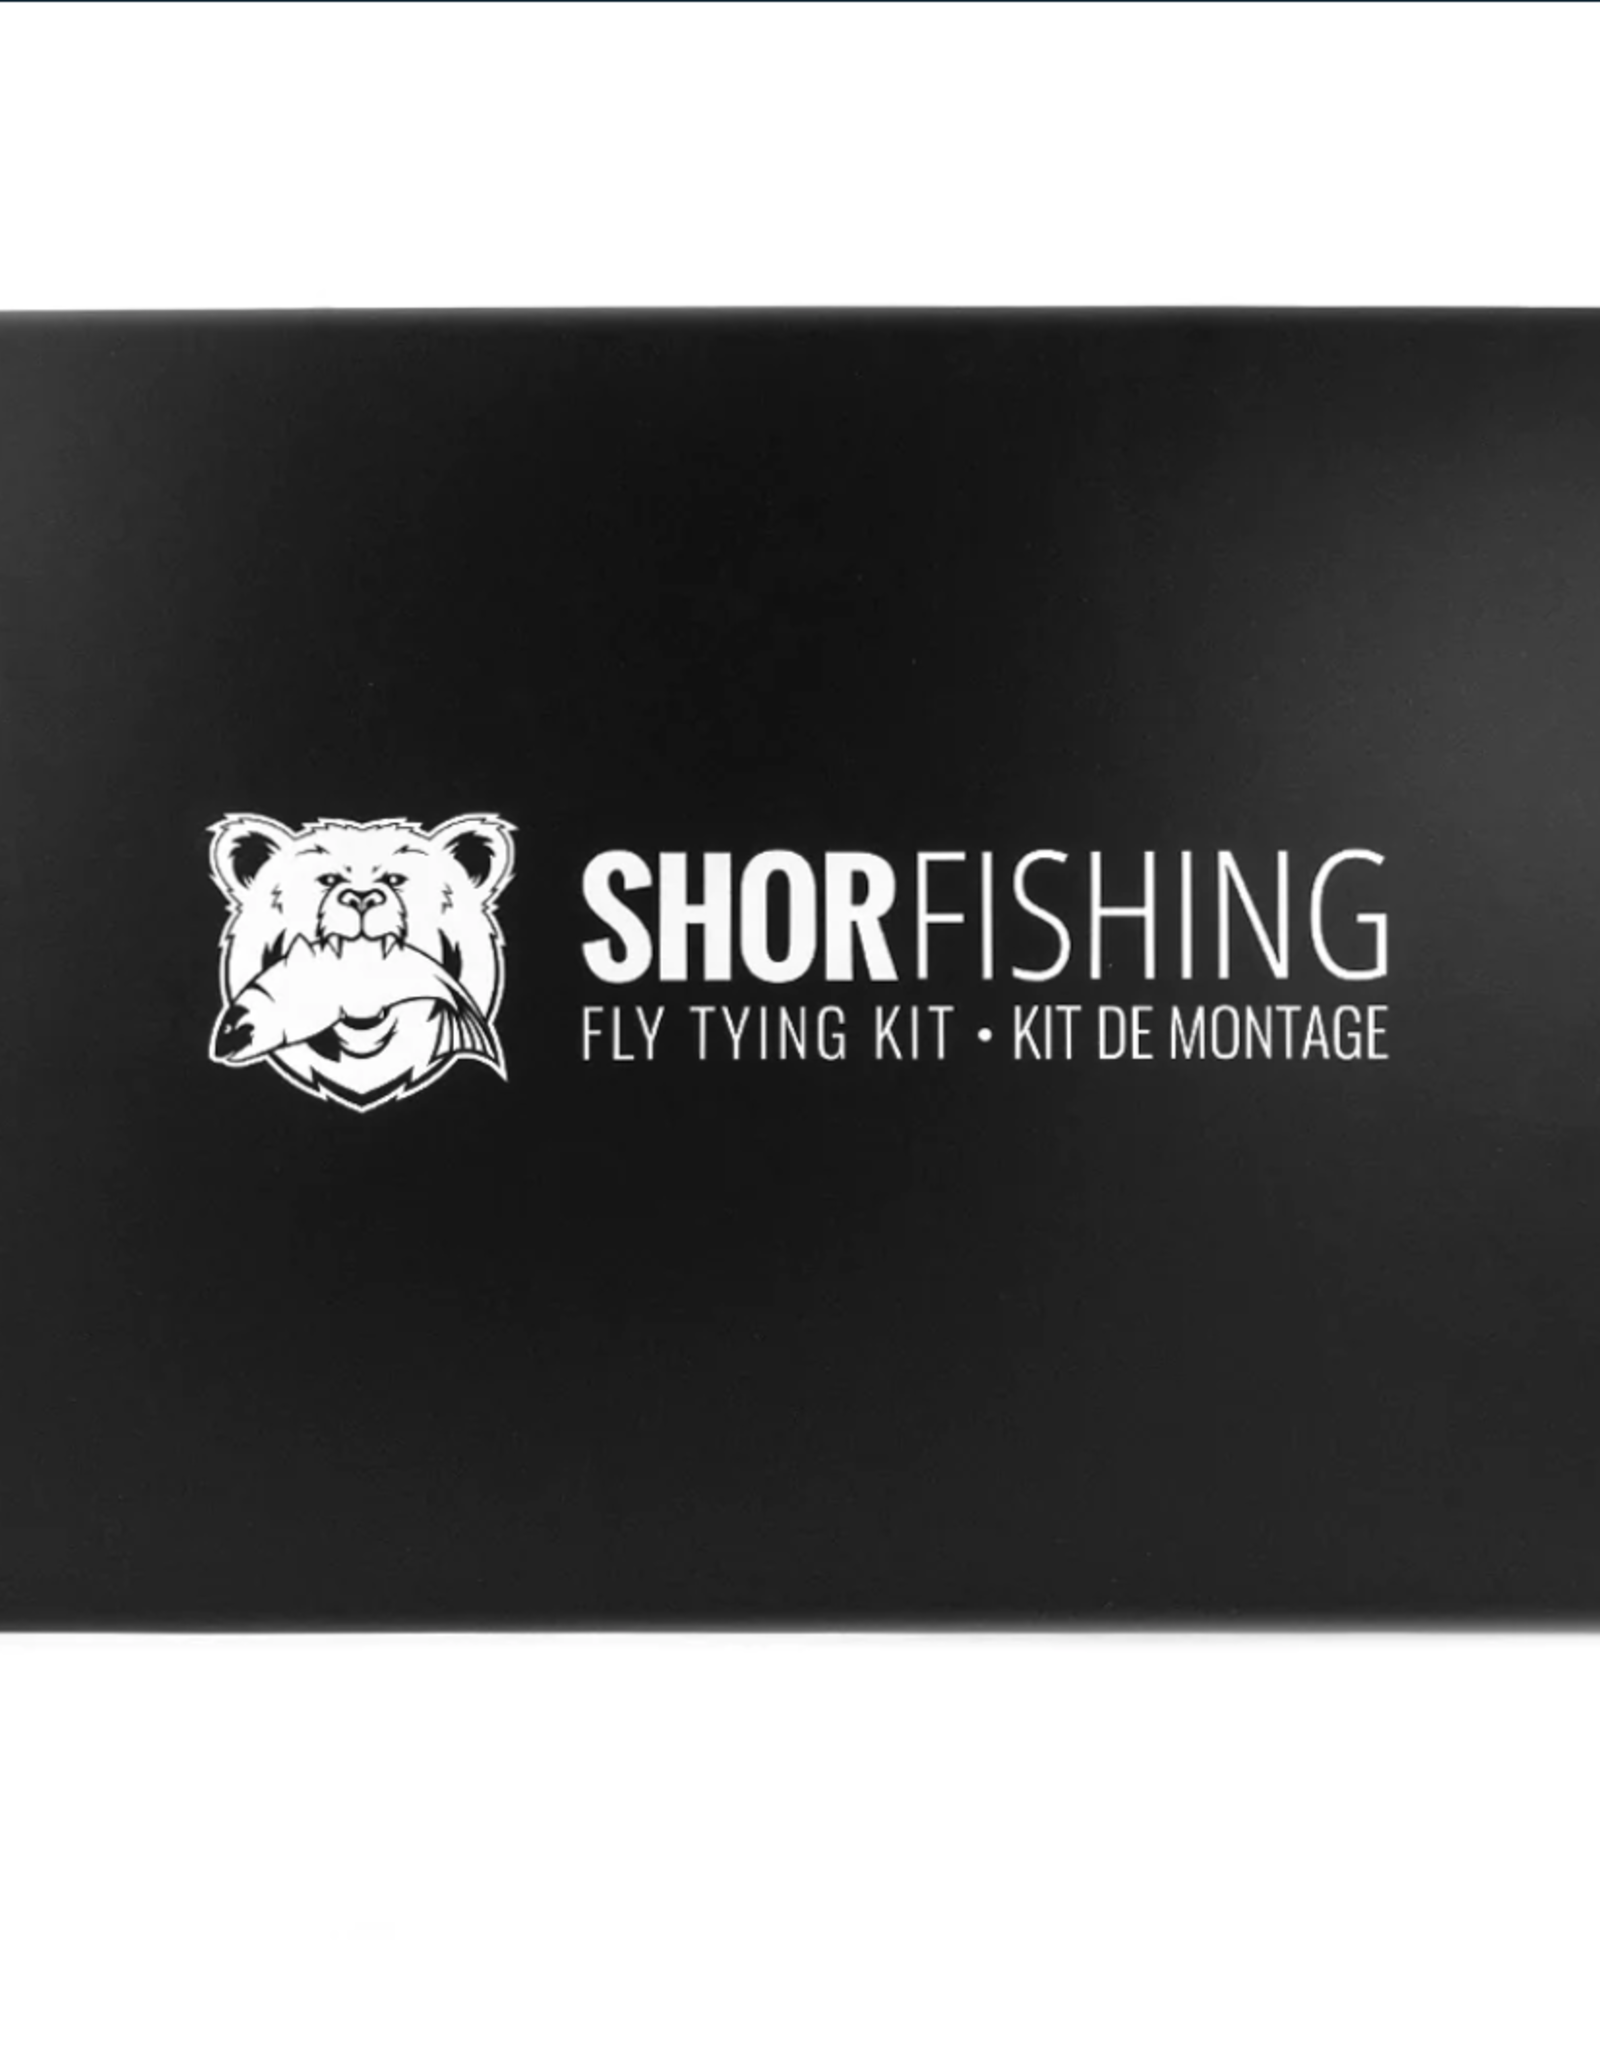 Shor Fishing Shor Fishing Trout Fly Tying Kit - Silver